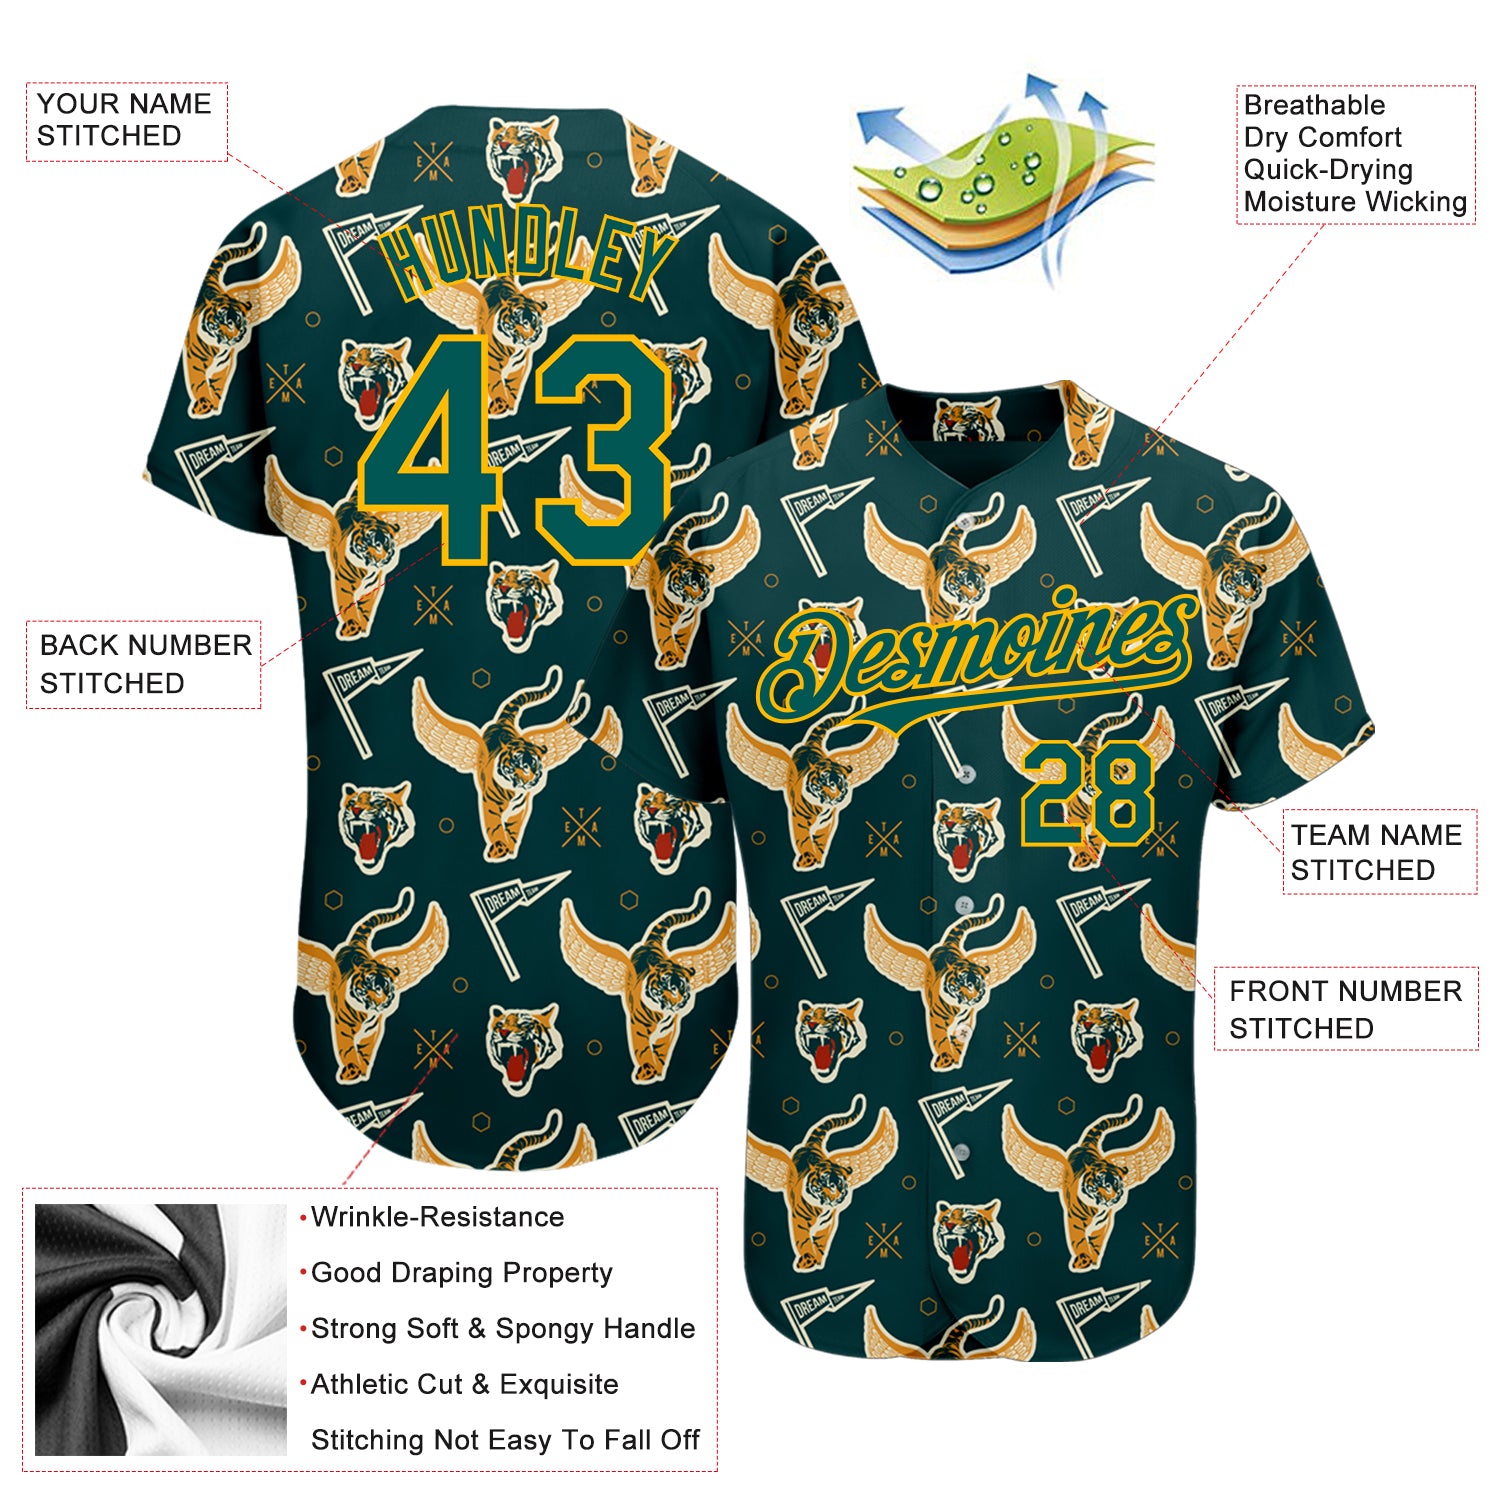 Tigers Custom Dye Sublimated Baseball Jersey